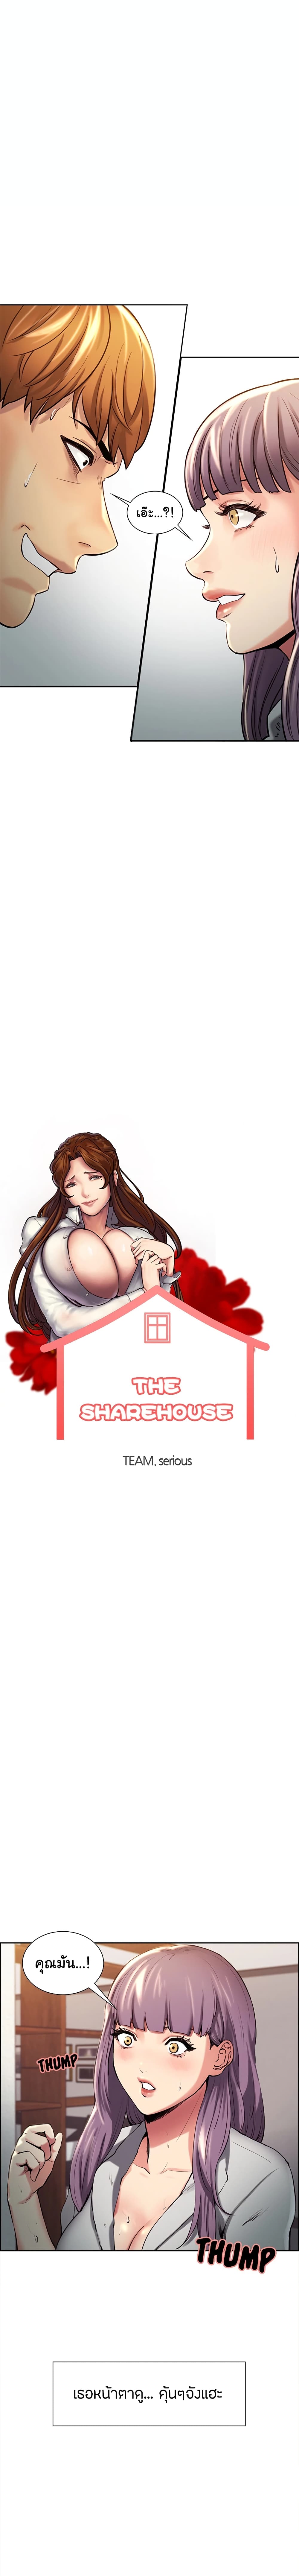 The Sharehouse 23-23